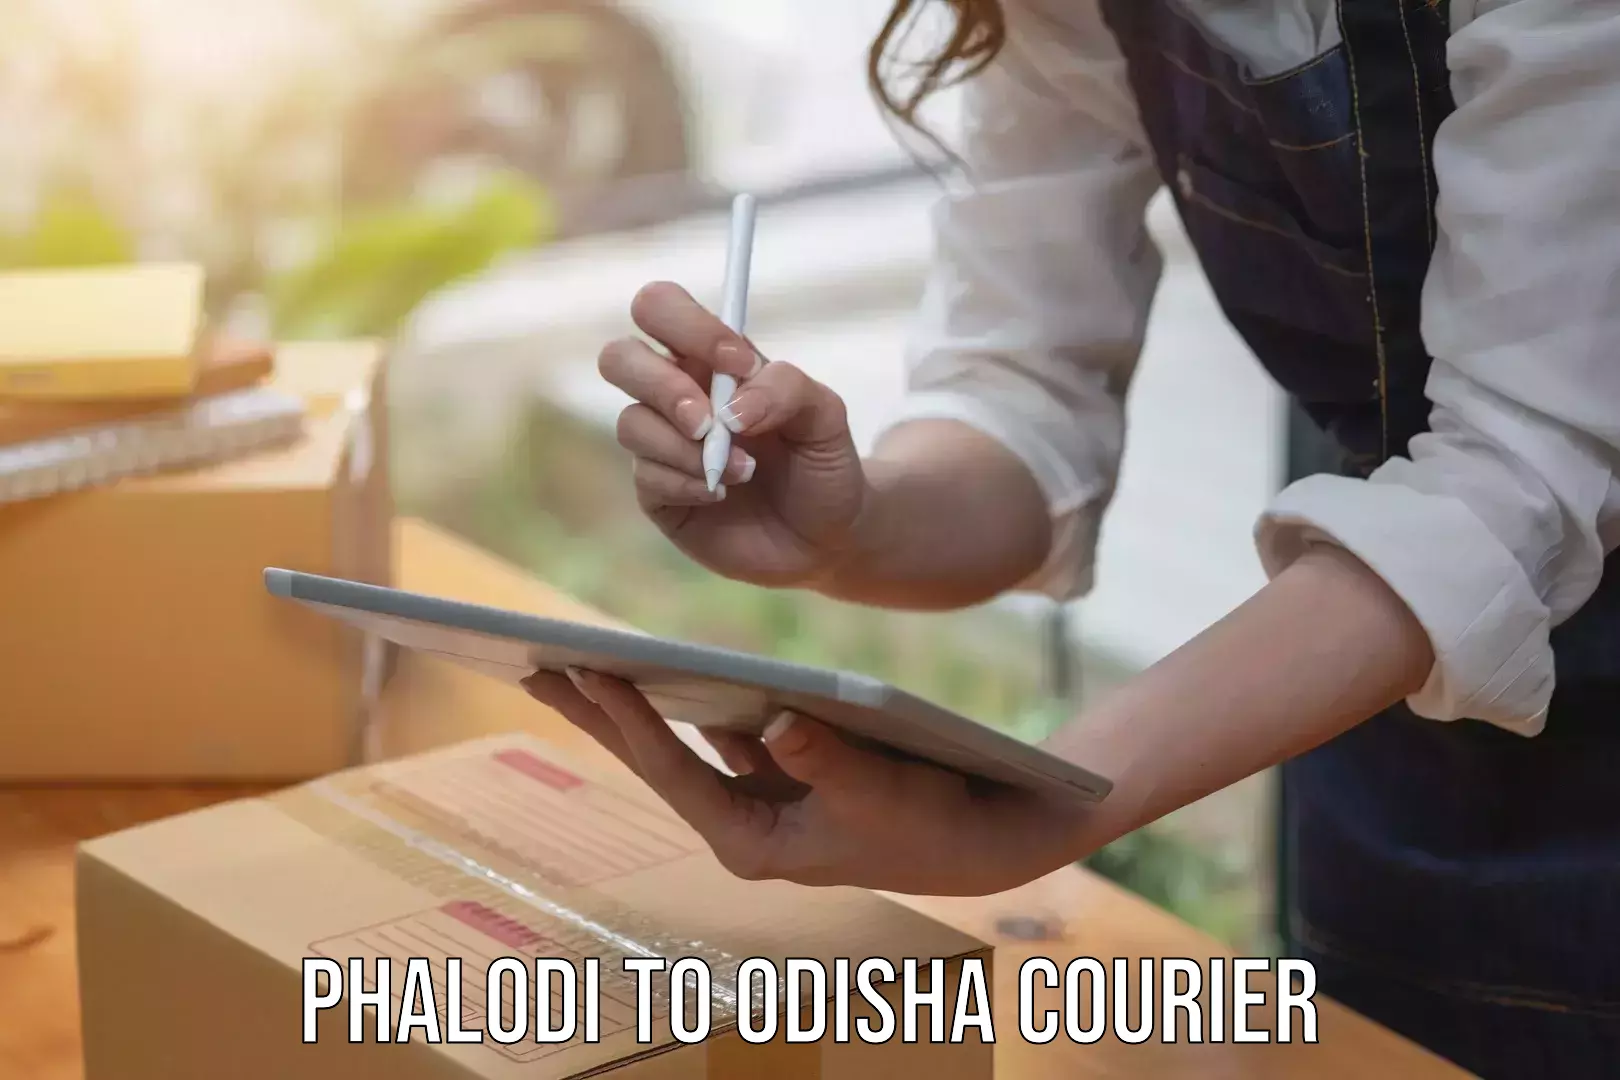 Courier service comparison Phalodi to Odisha